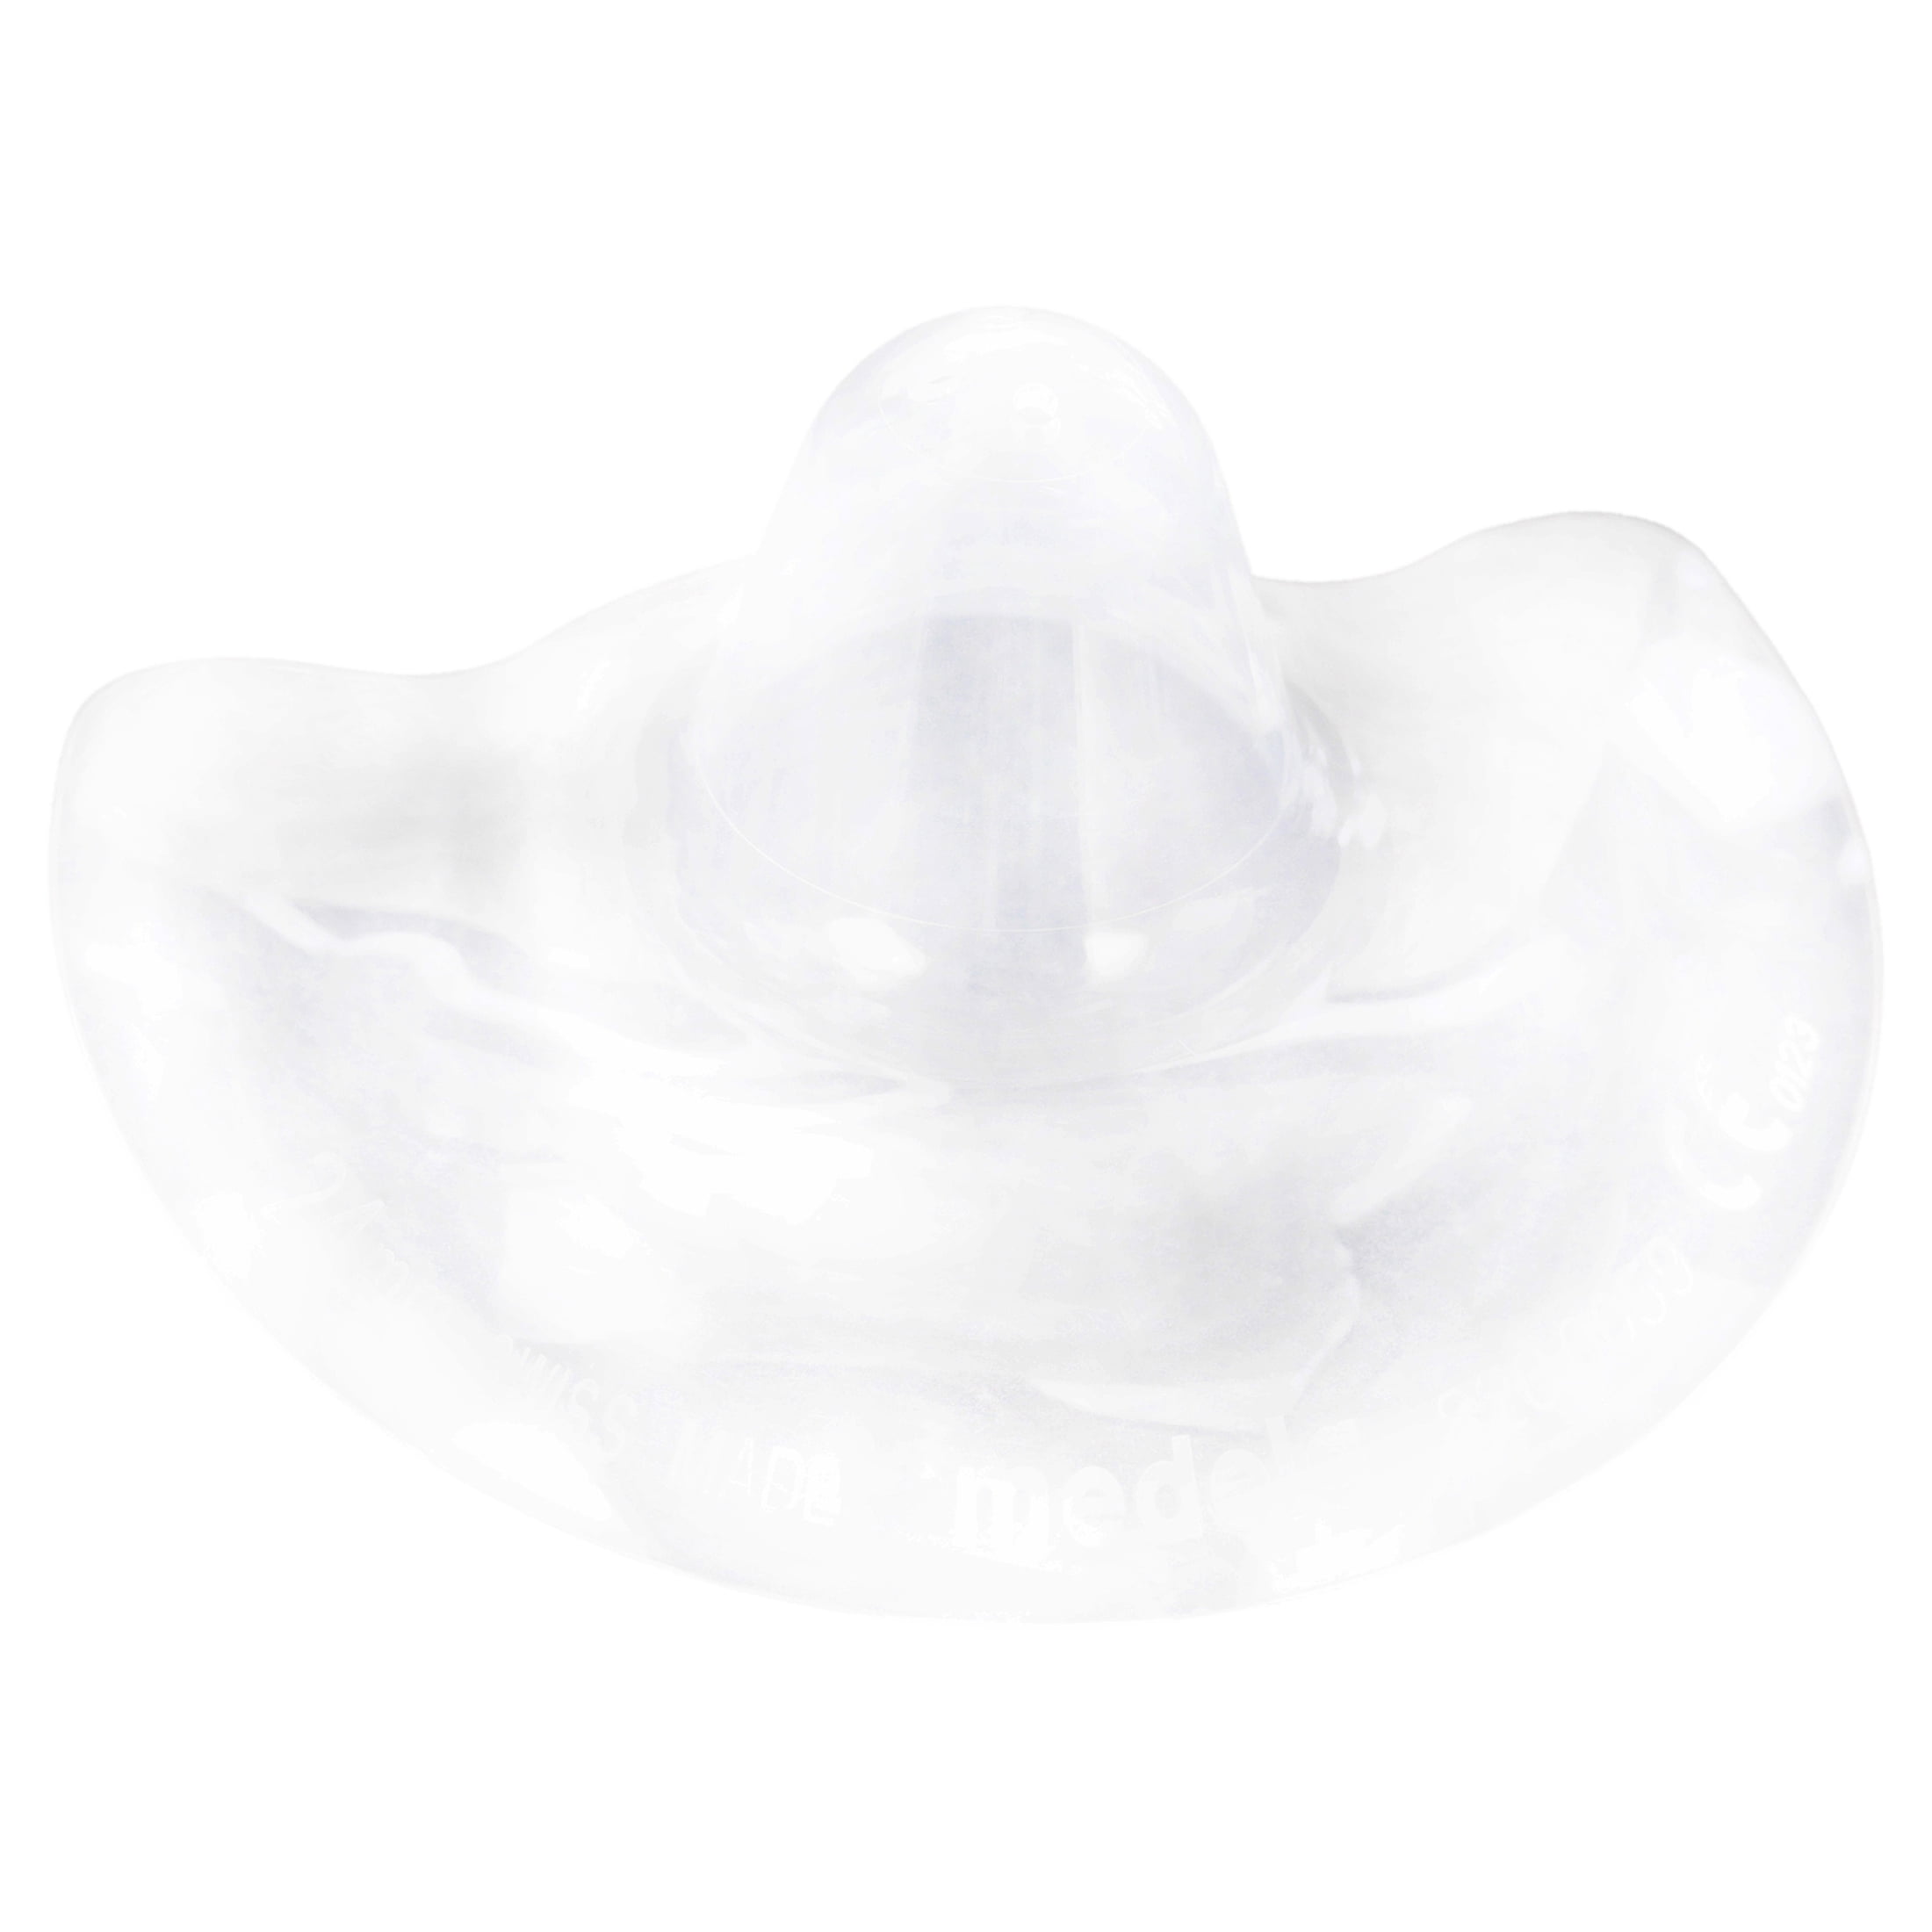 Medela Contact Nipple Shield, 16mm, Silicone, DEHP & BPA Free, Clear,  67251, 1 Each 